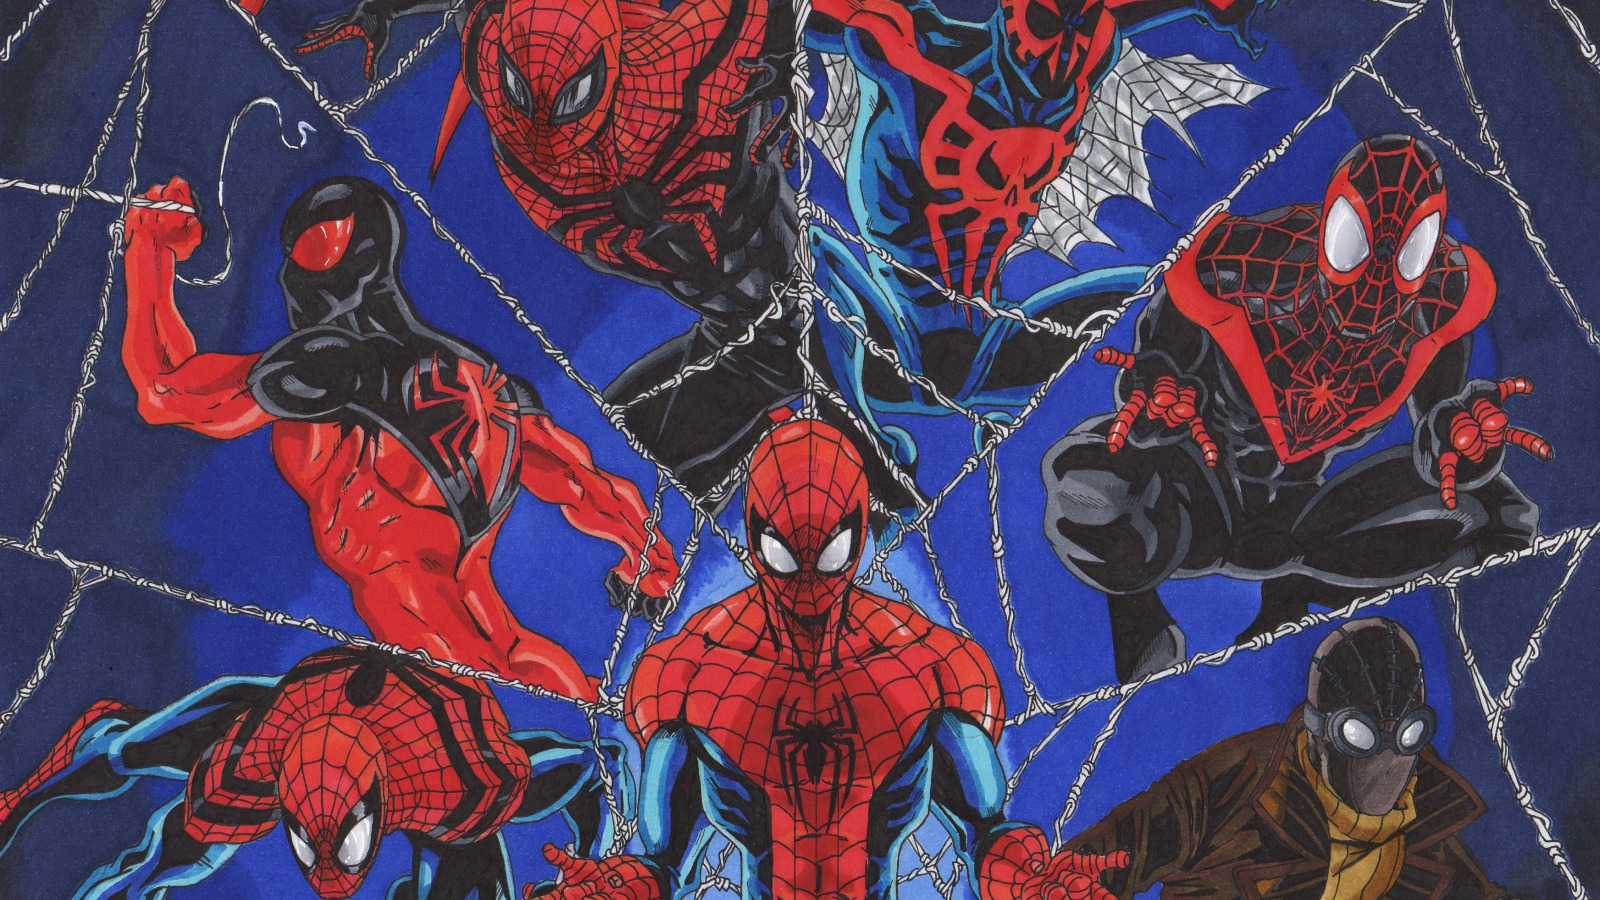 ben reilly spider man wallpaper